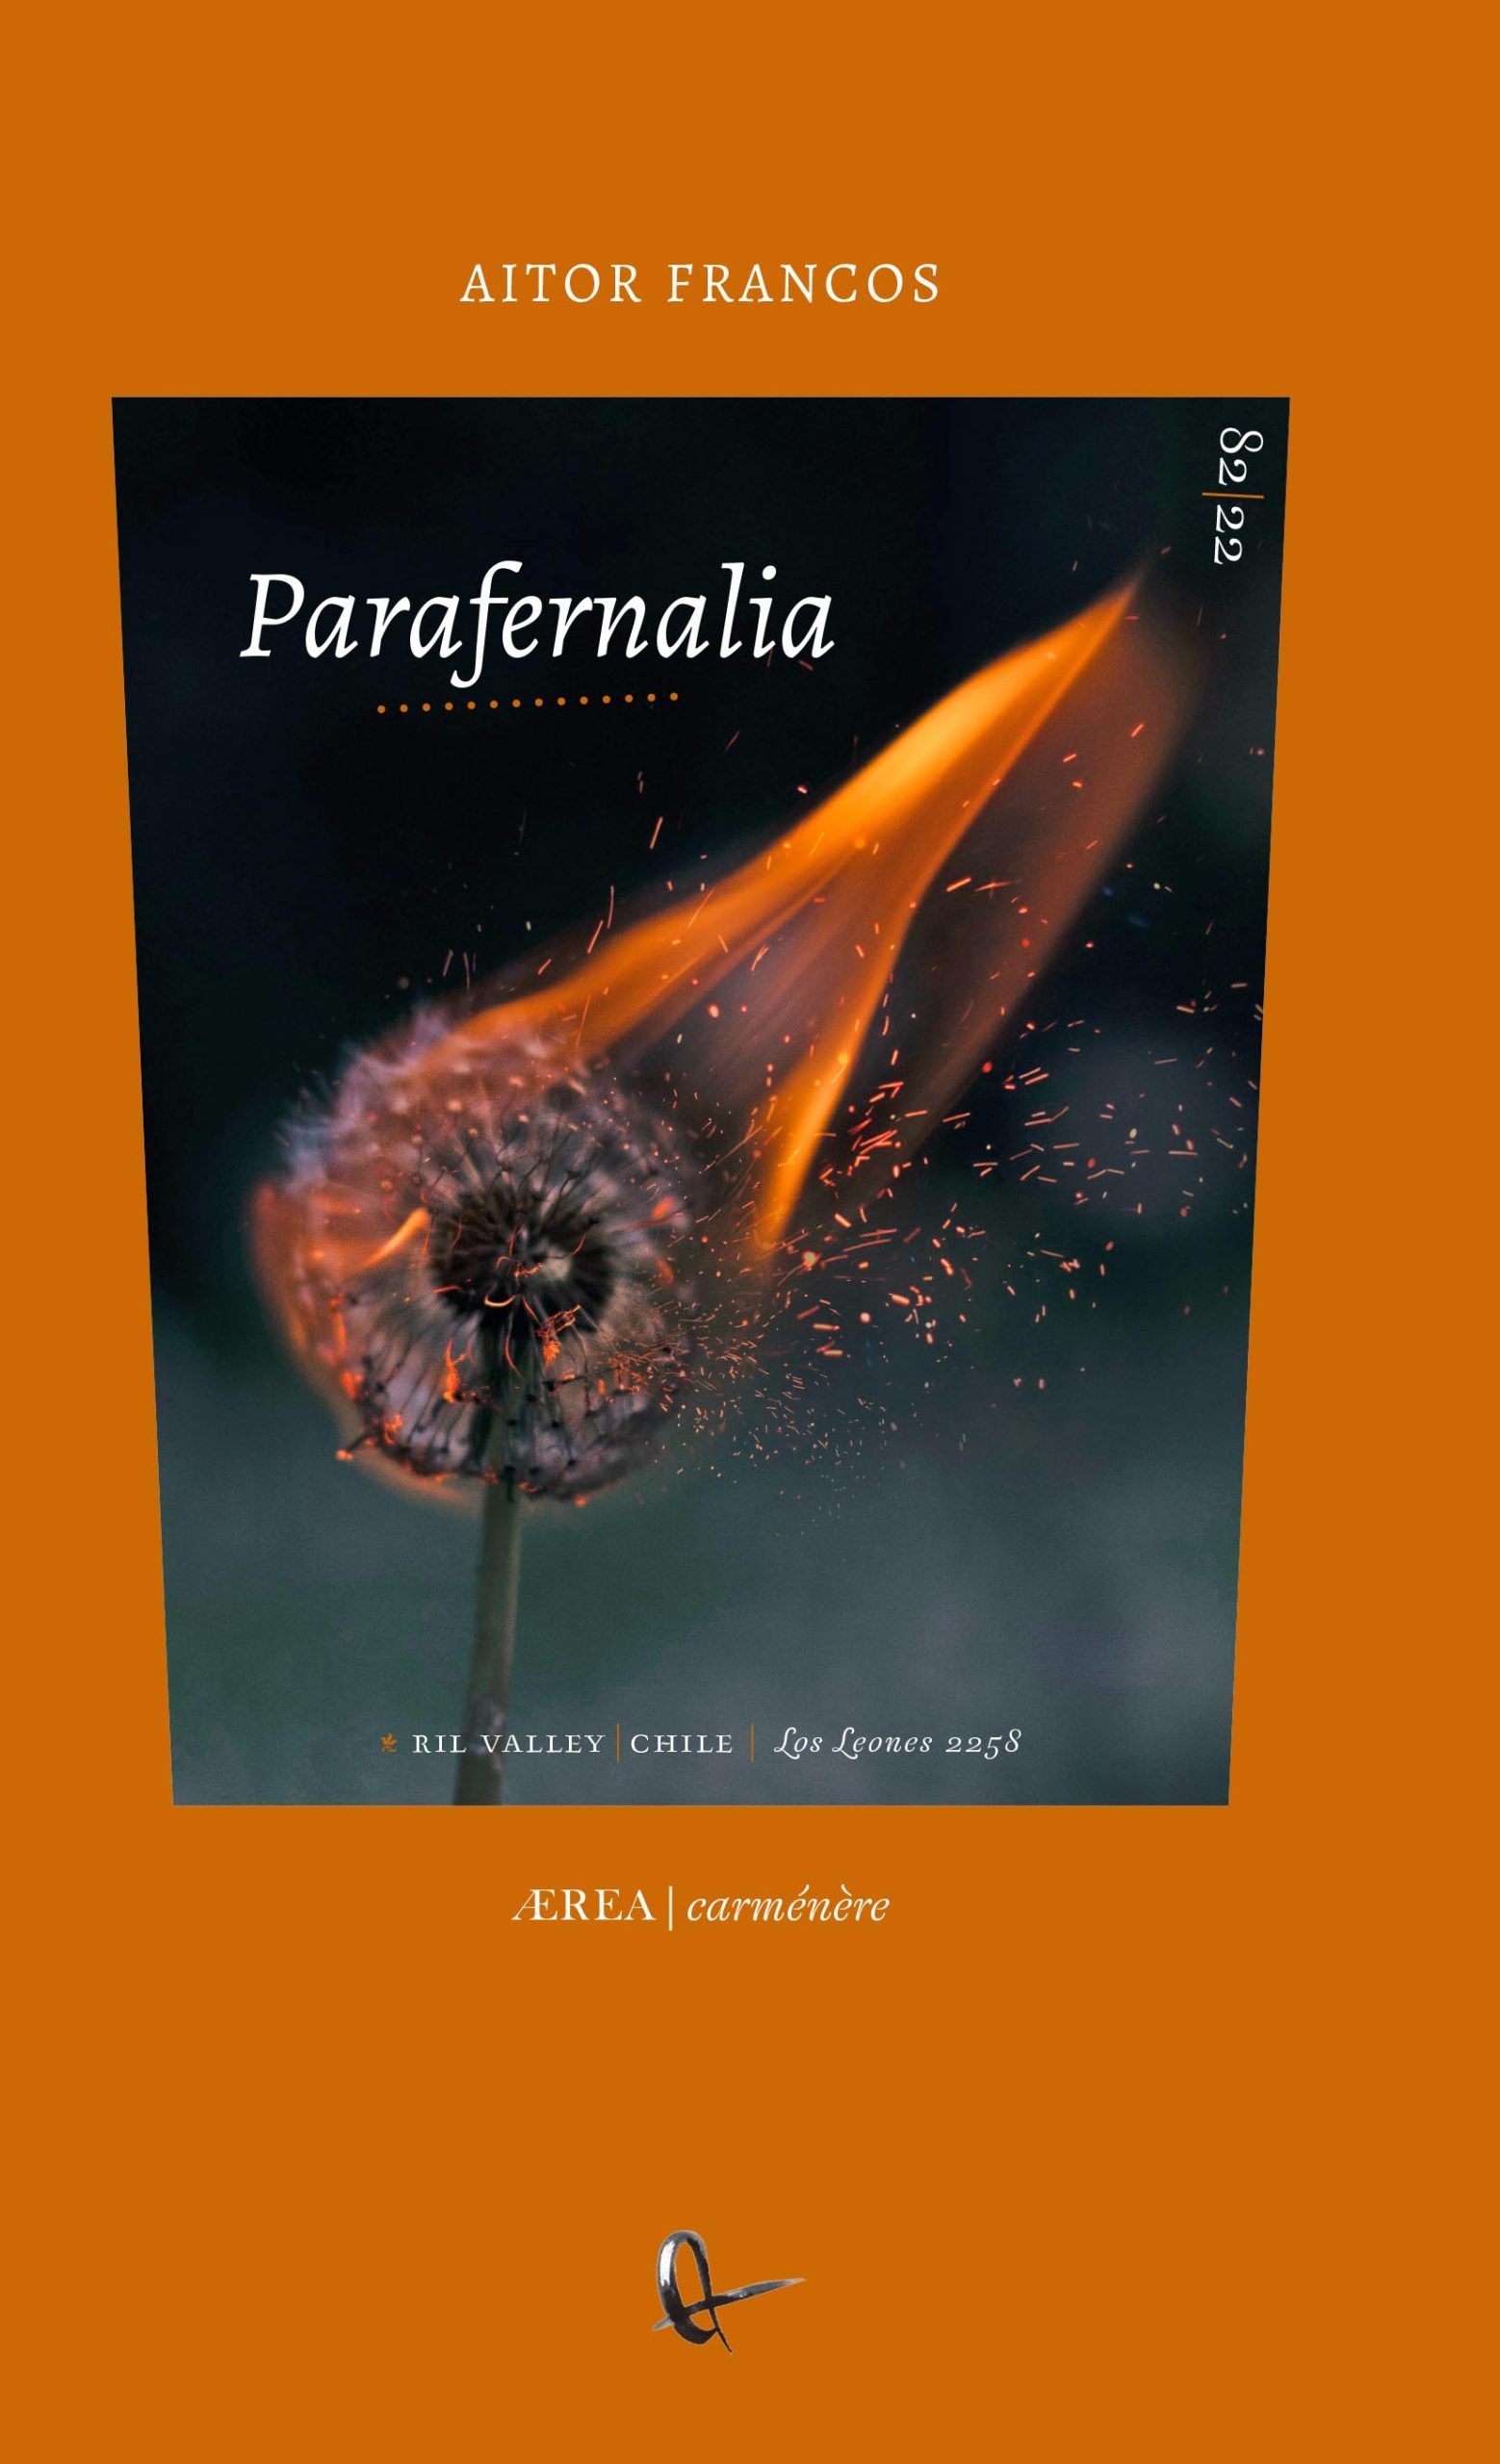 Parafernalia 1